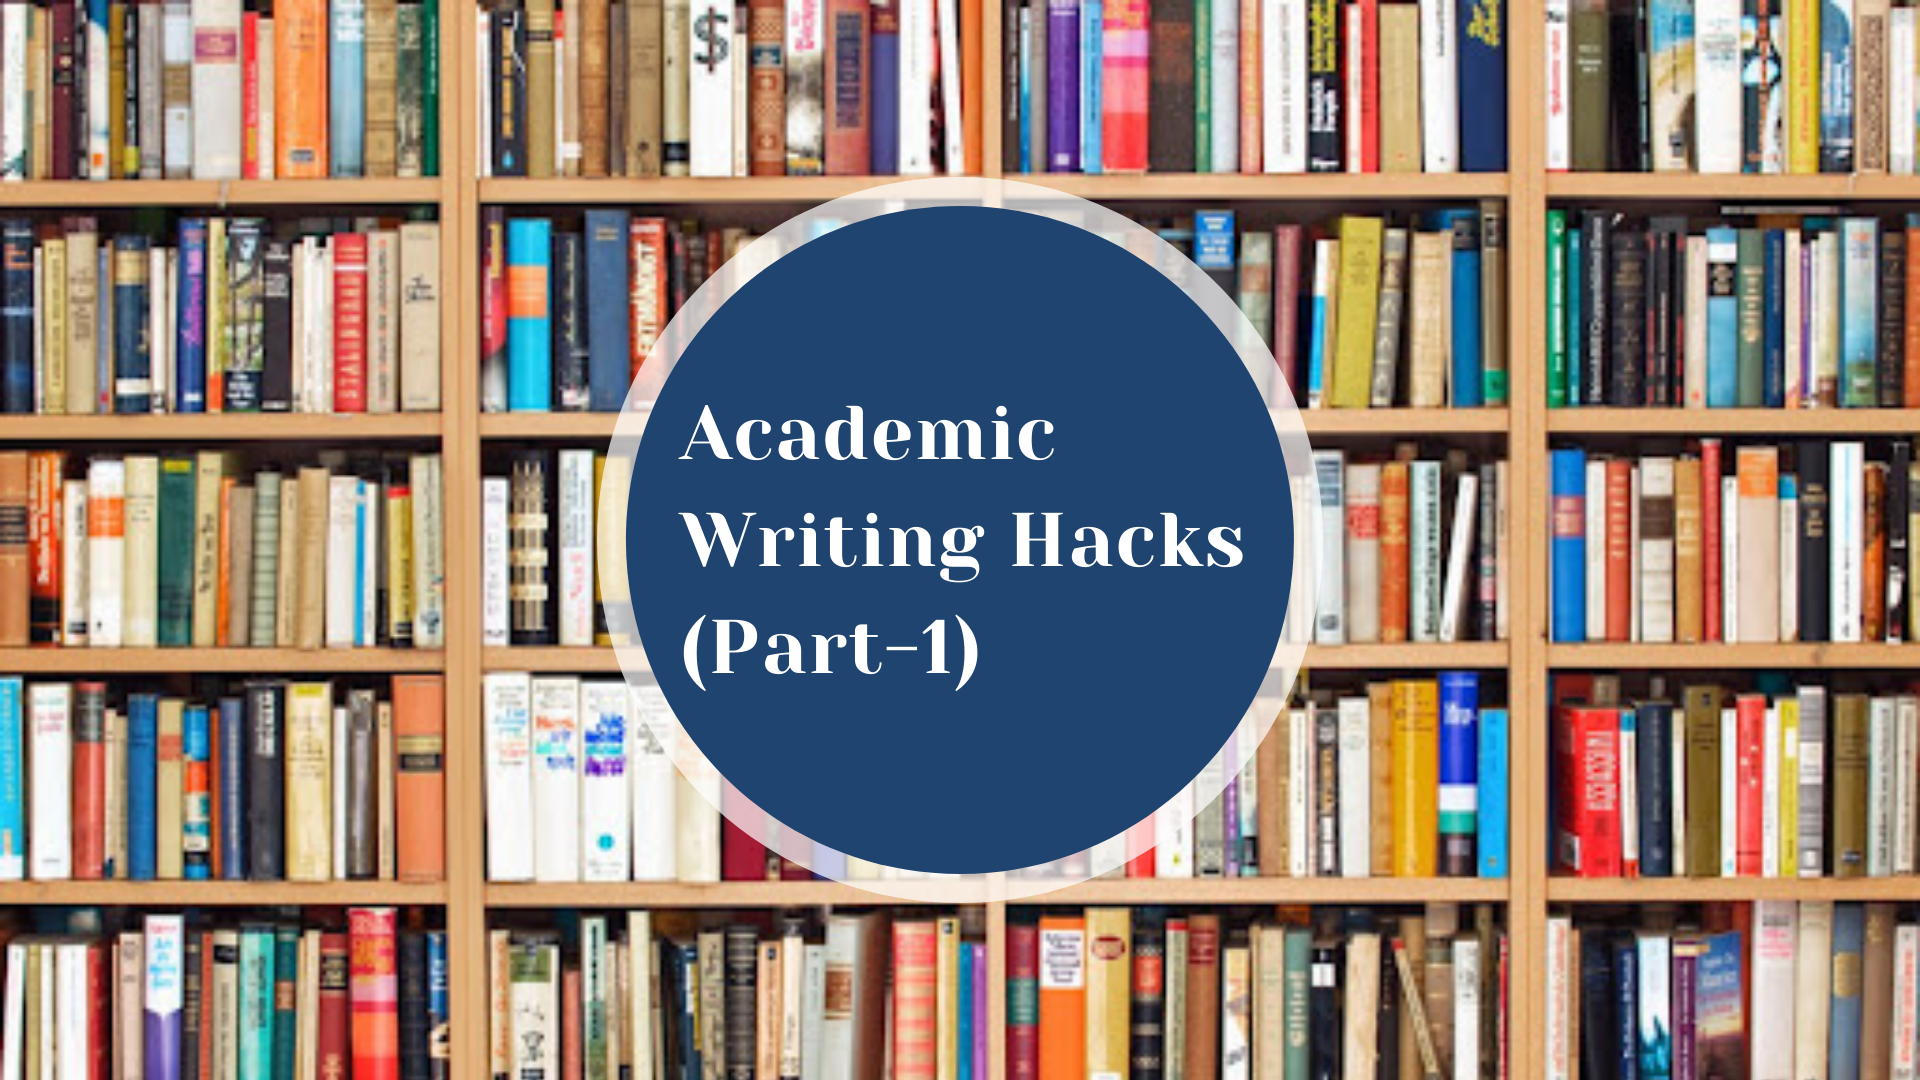 Academic Writing Hacks (Part-1) course image